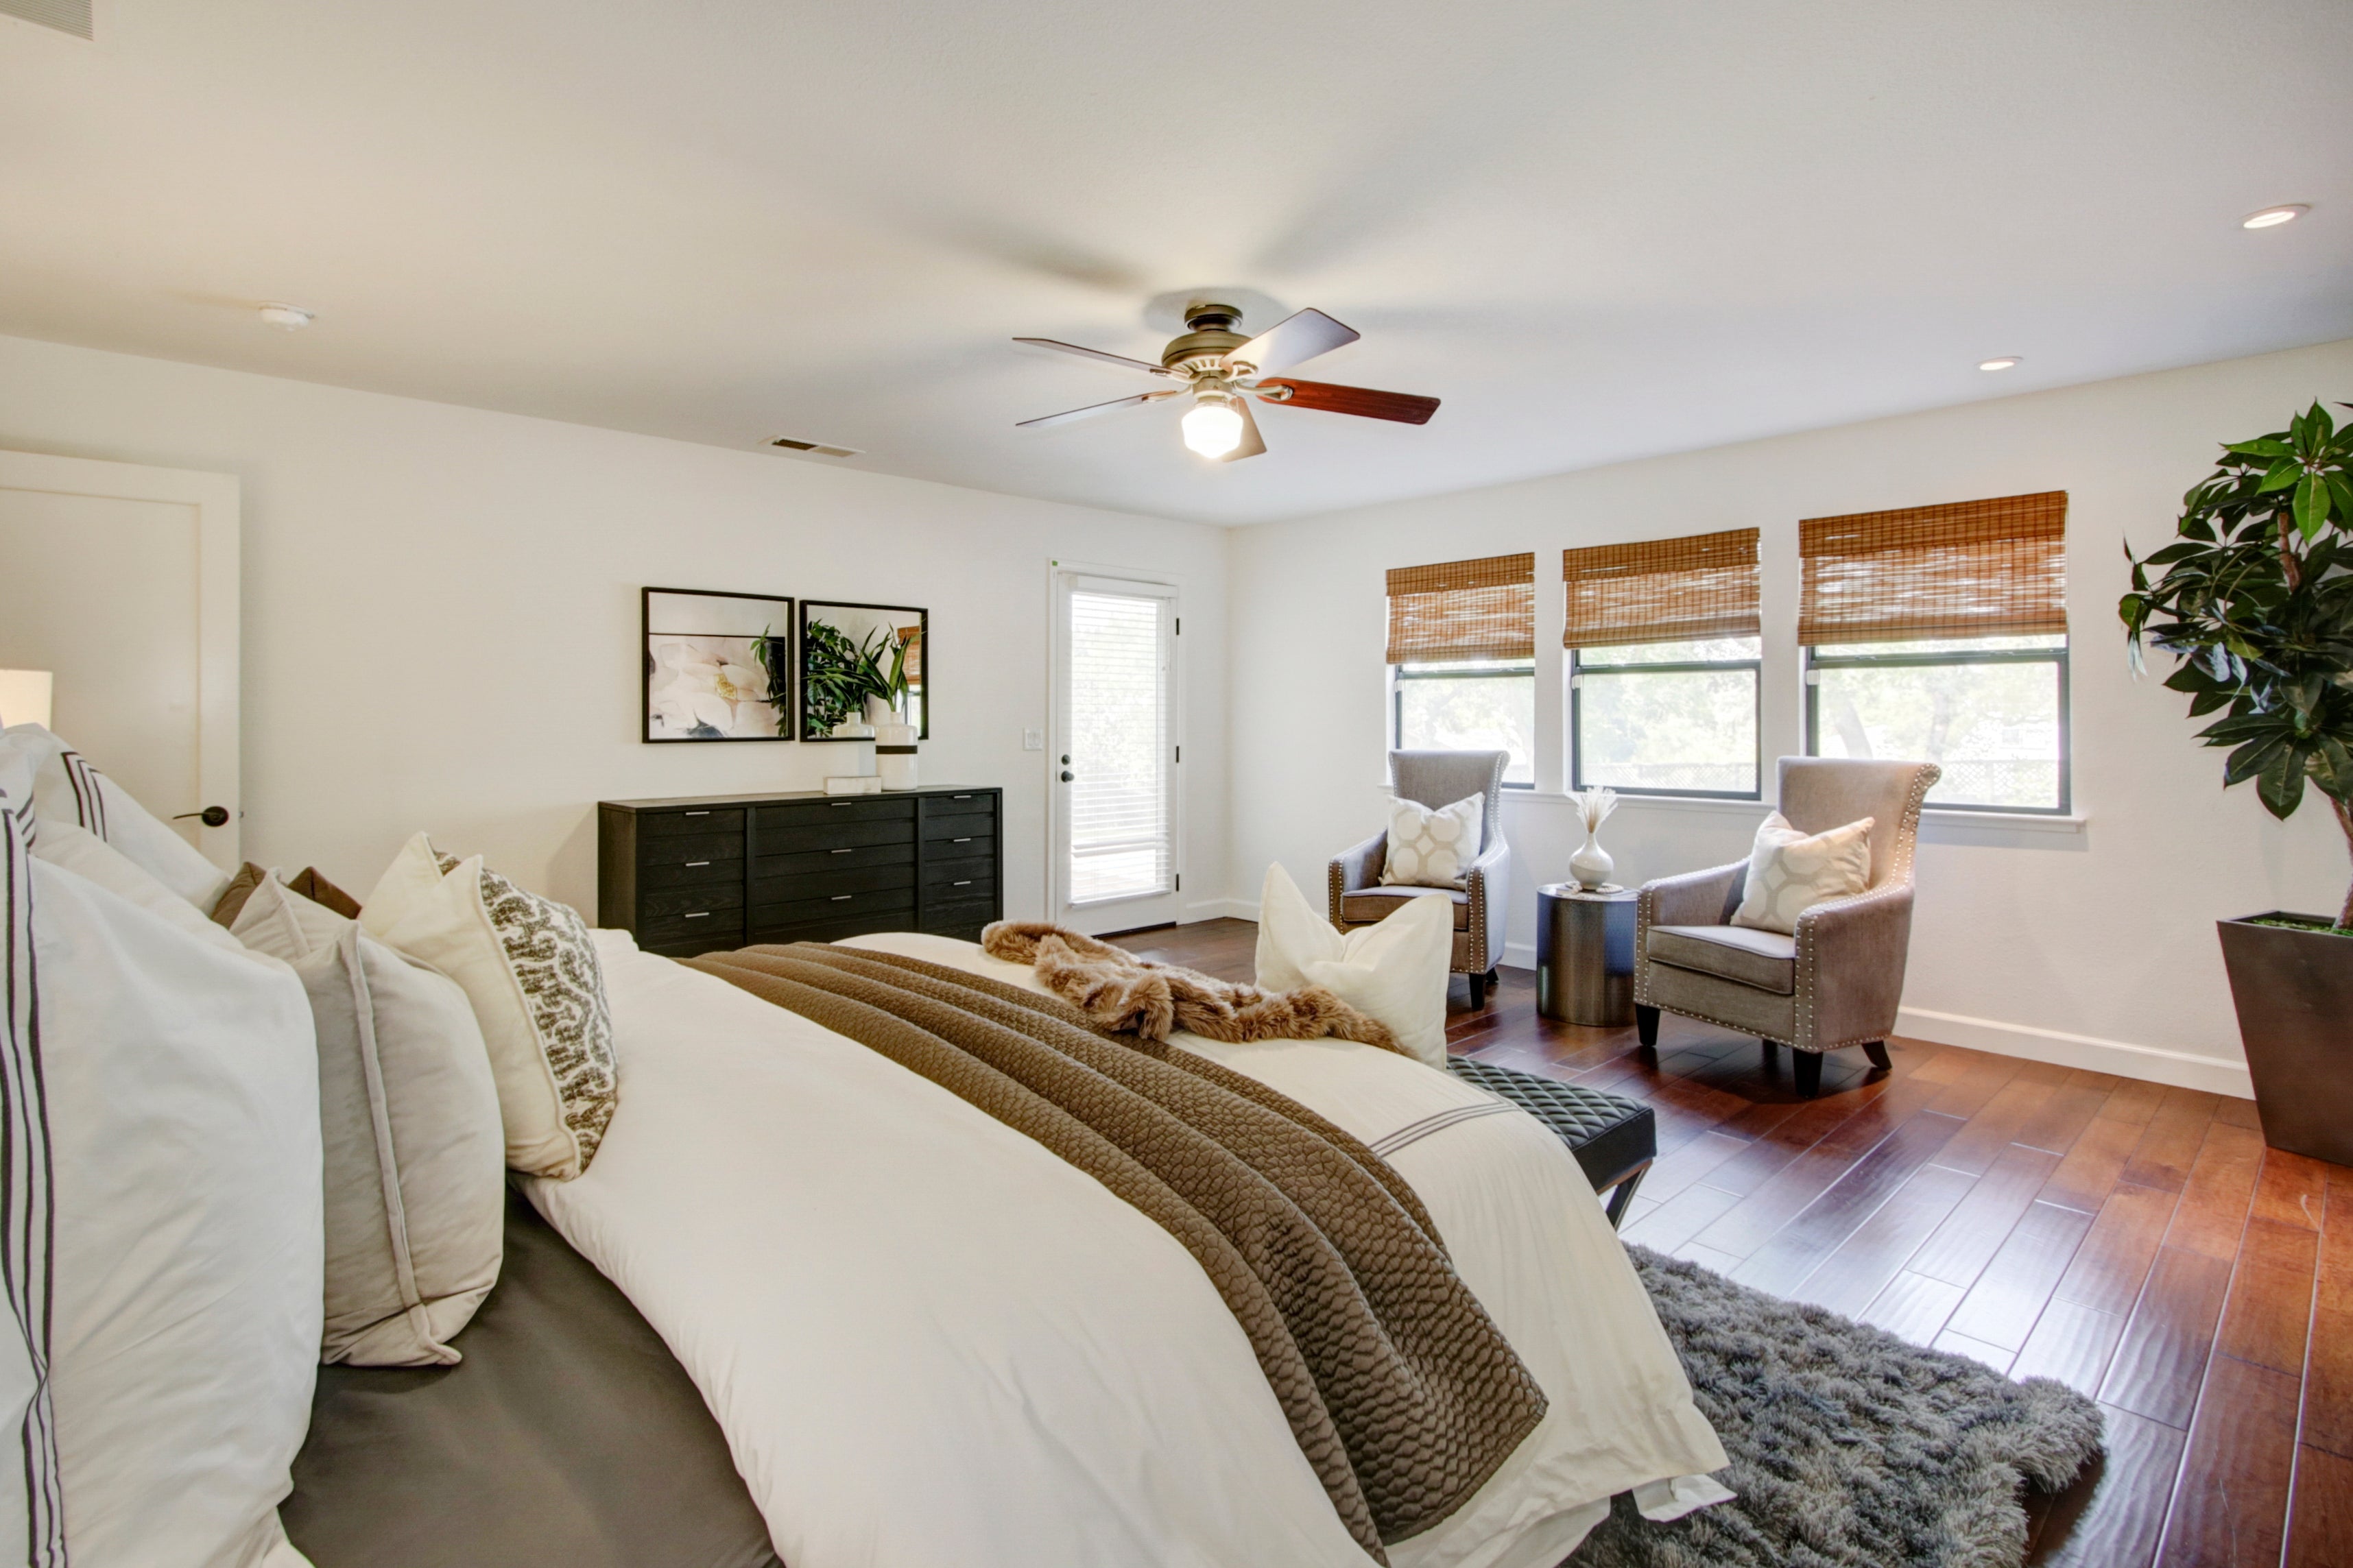 Premiere Home Staging Projects | Master bedroom interior design idea - Telegraph Hl, El Dorado Hills